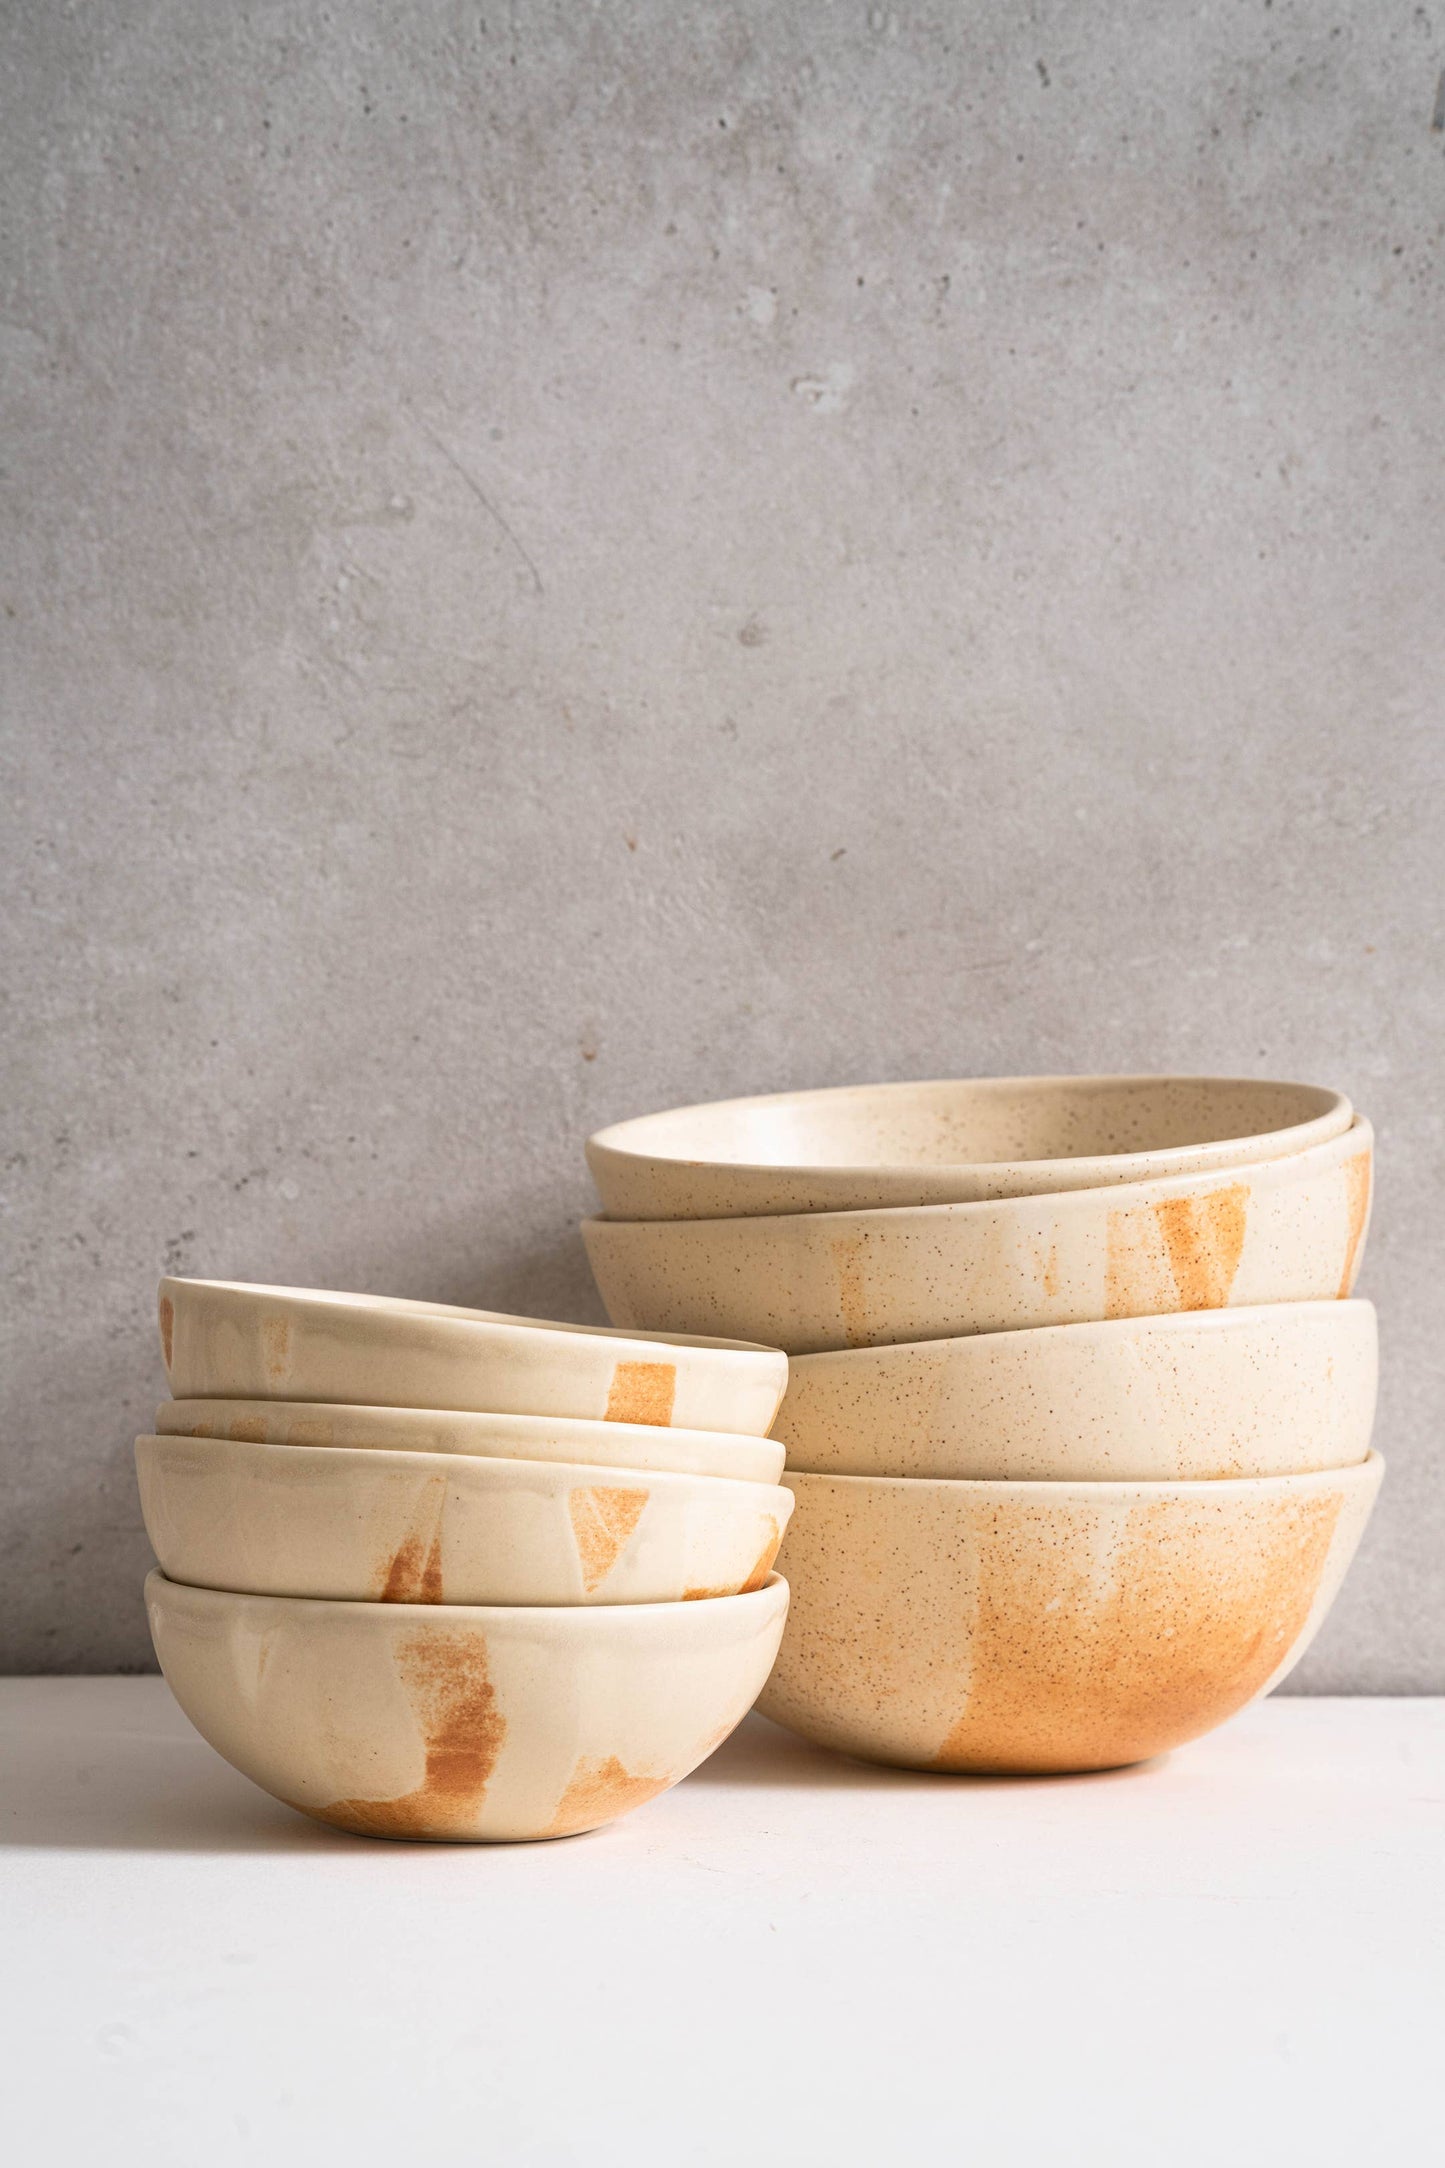 Ethical Trade Co Tabletop Everyday Bowl / Caramel Handmade Ukrainian Stoneware Bowl